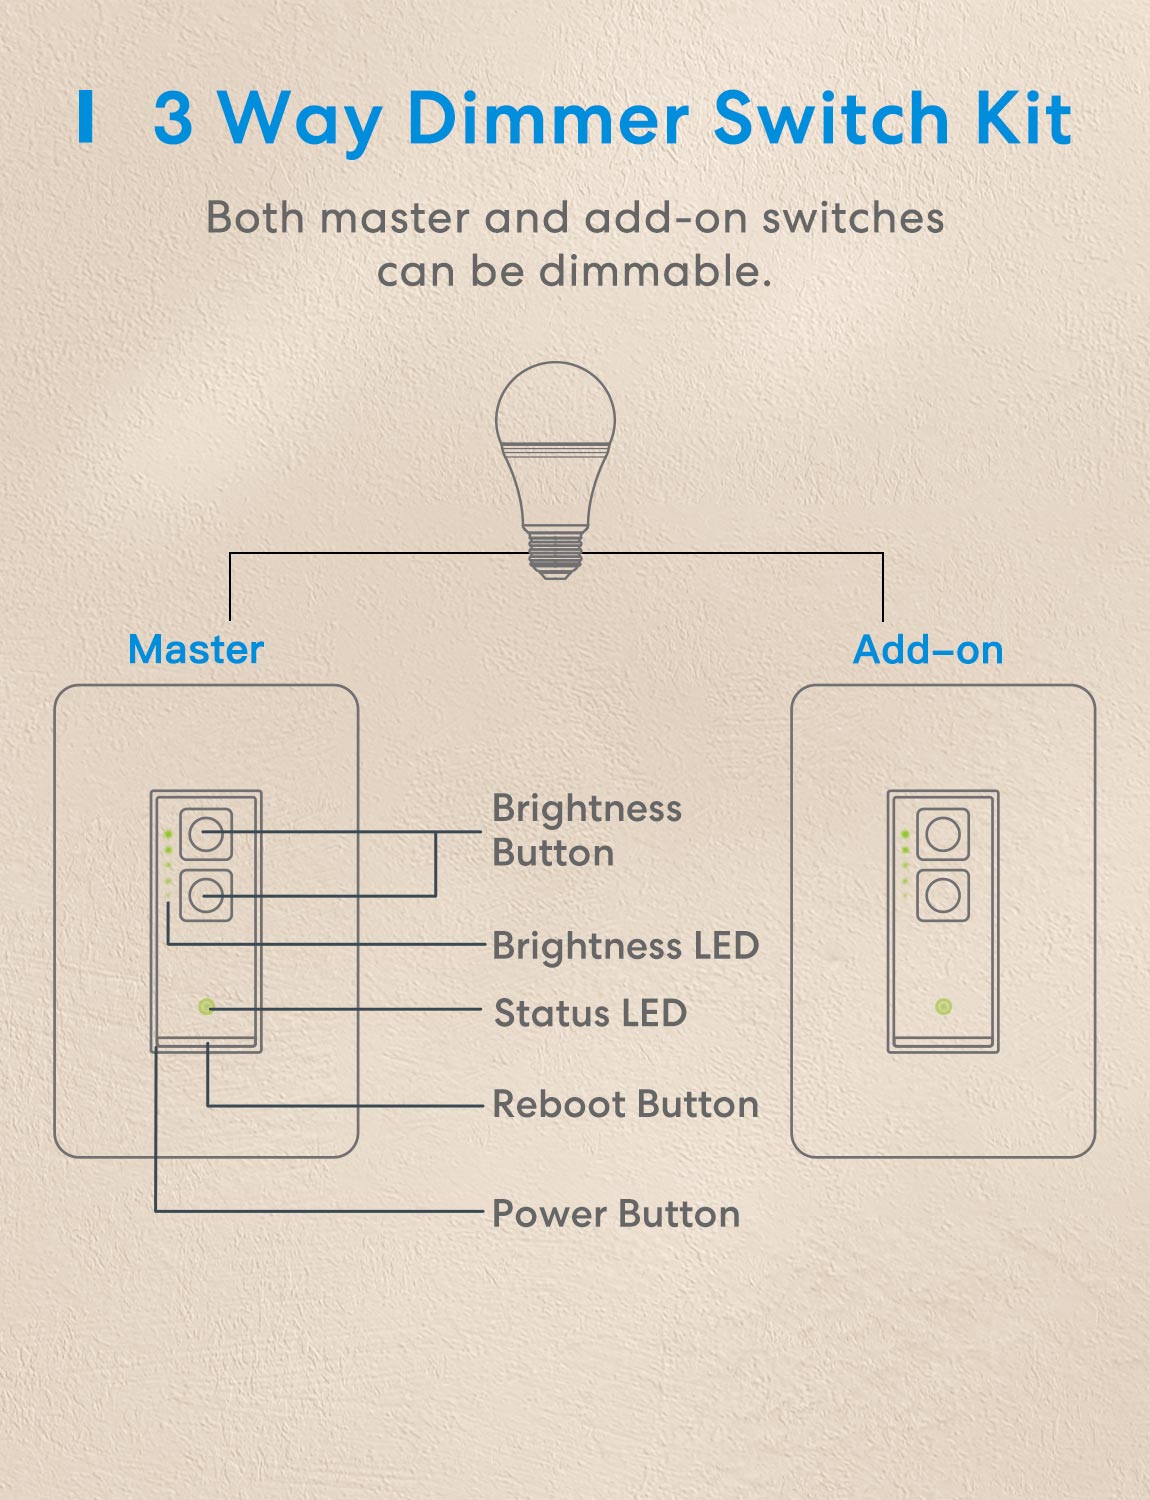 Meross Smart Dimmer Switch, MSS570XHK (US/CA-Version)